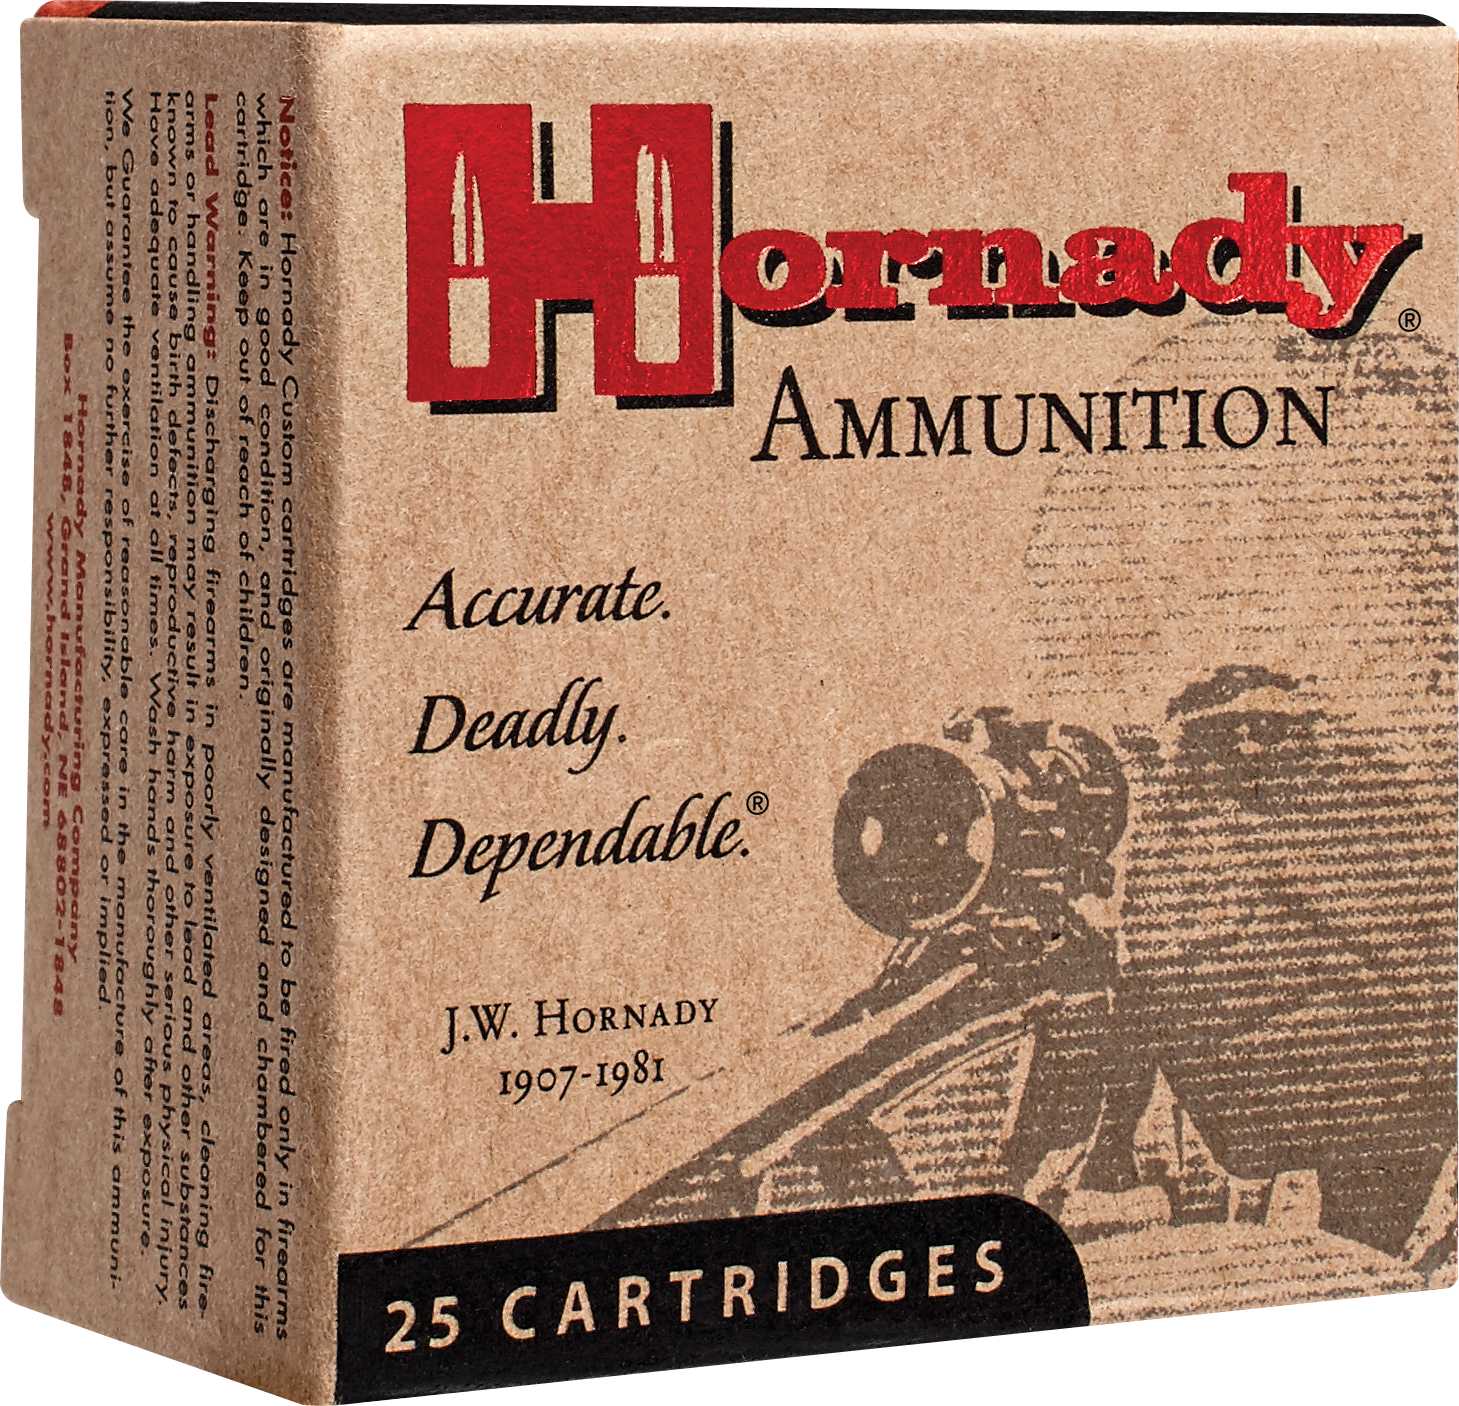 38 Special 25 Rounds Ammunition Hornady 158 Grain Hollow Point